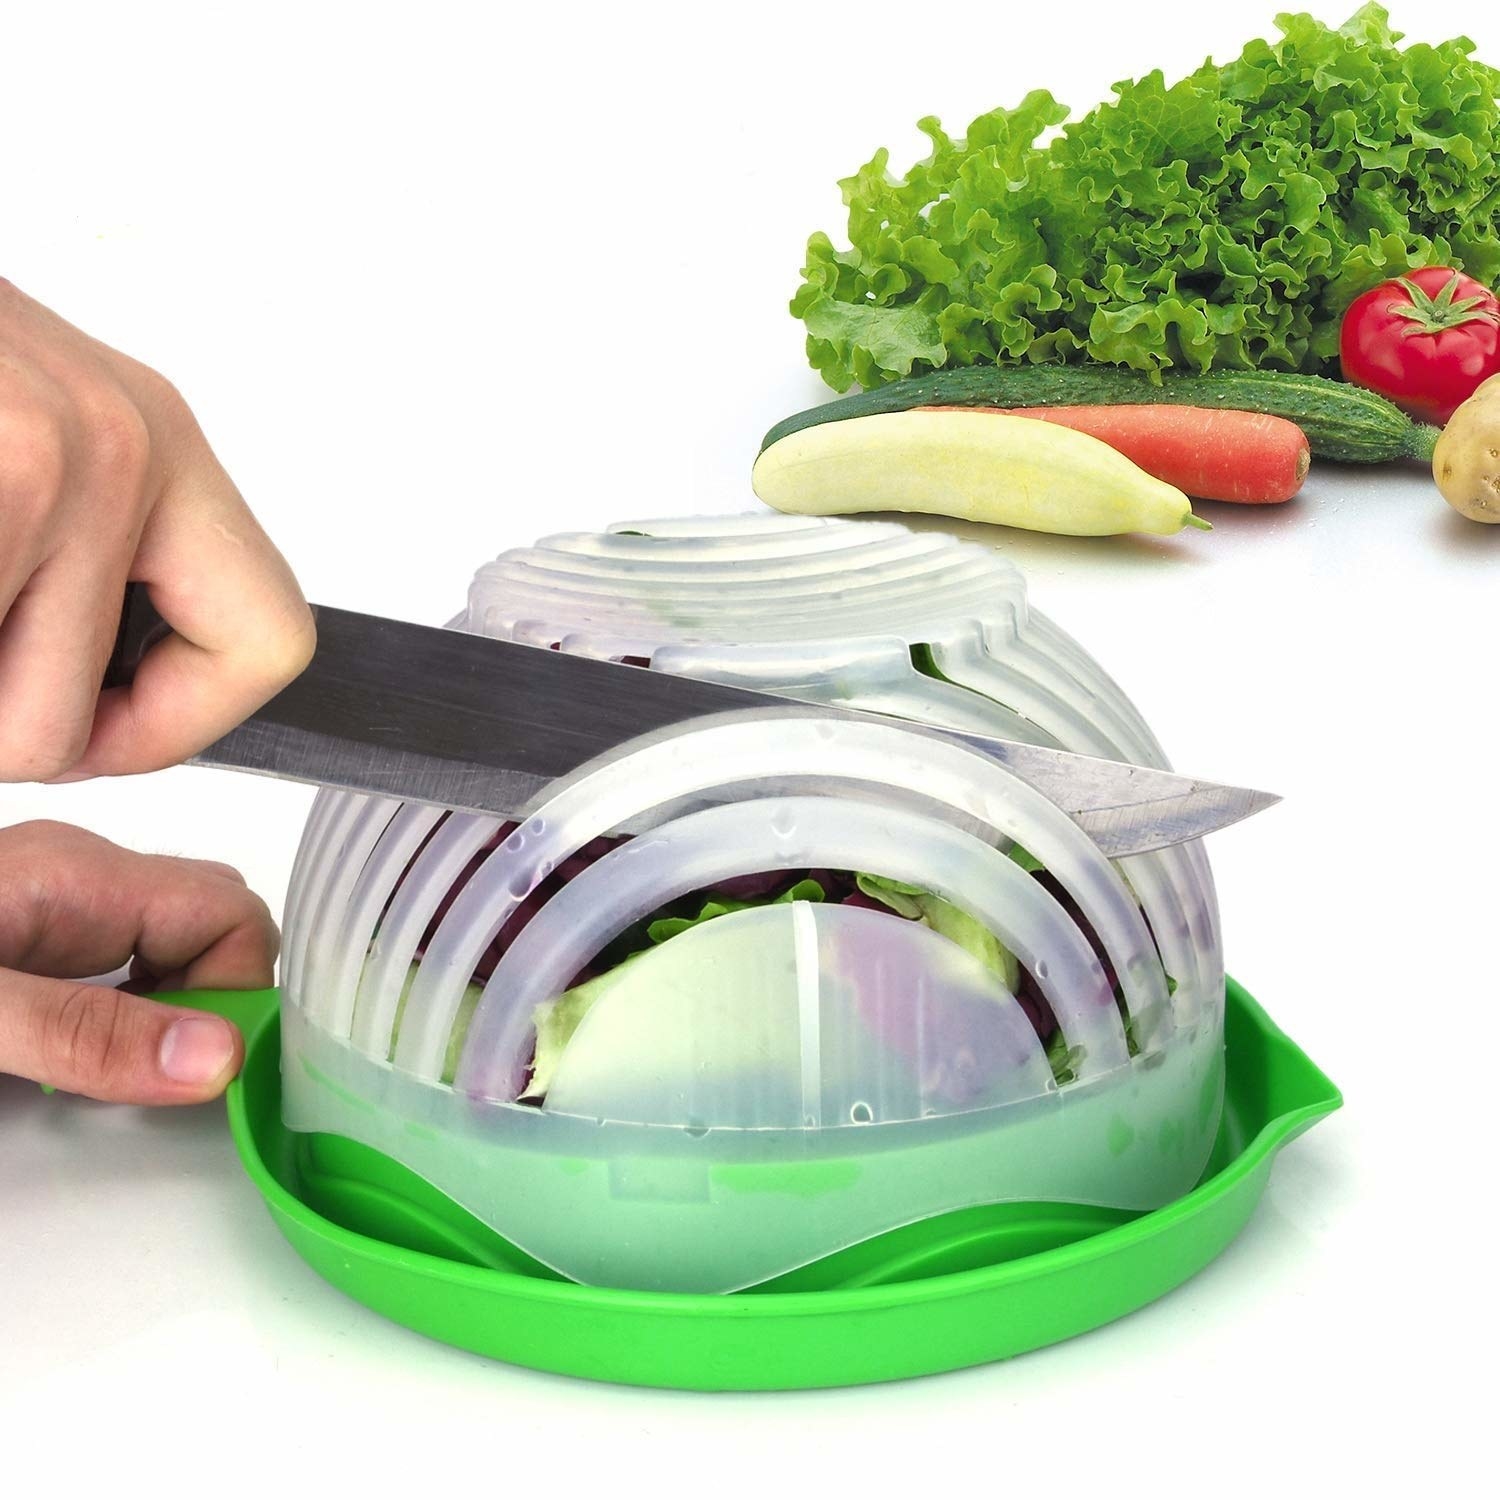 19 Vegan Kitchen Gadgets That’ll Make Going Vegan Easier